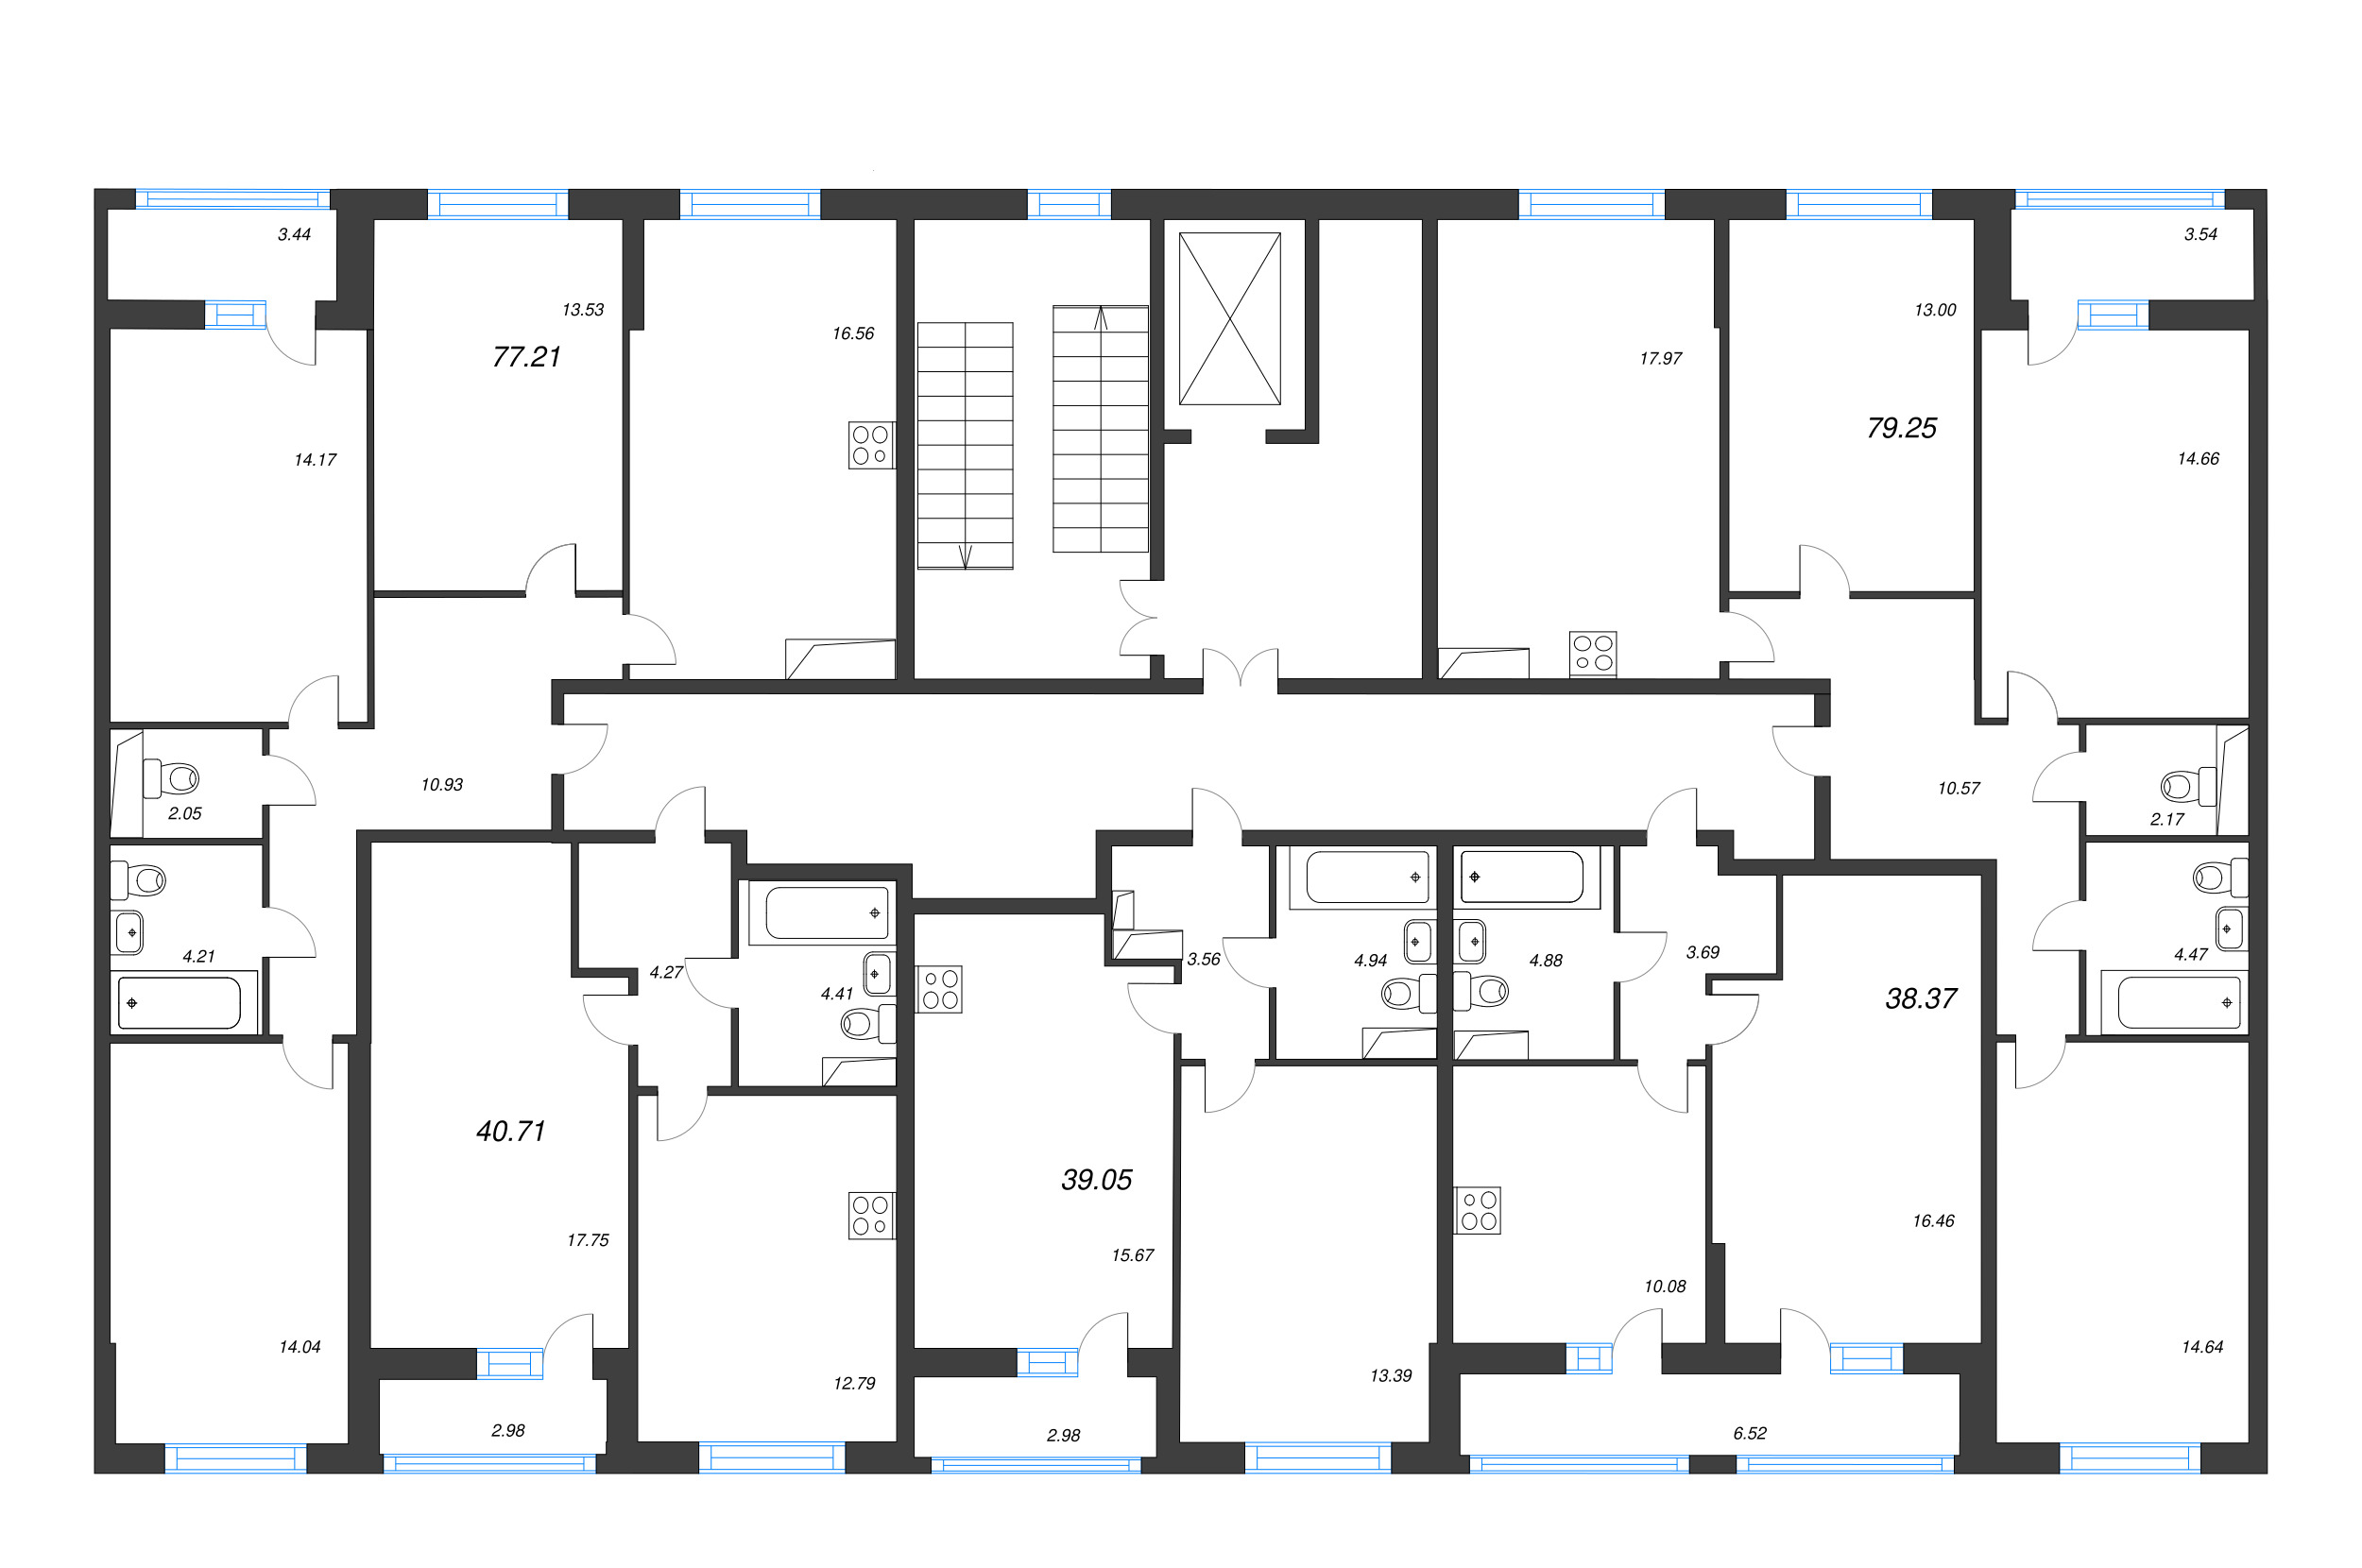 4-комнатная (Евро) квартира, 77.21 м² - планировка этажа